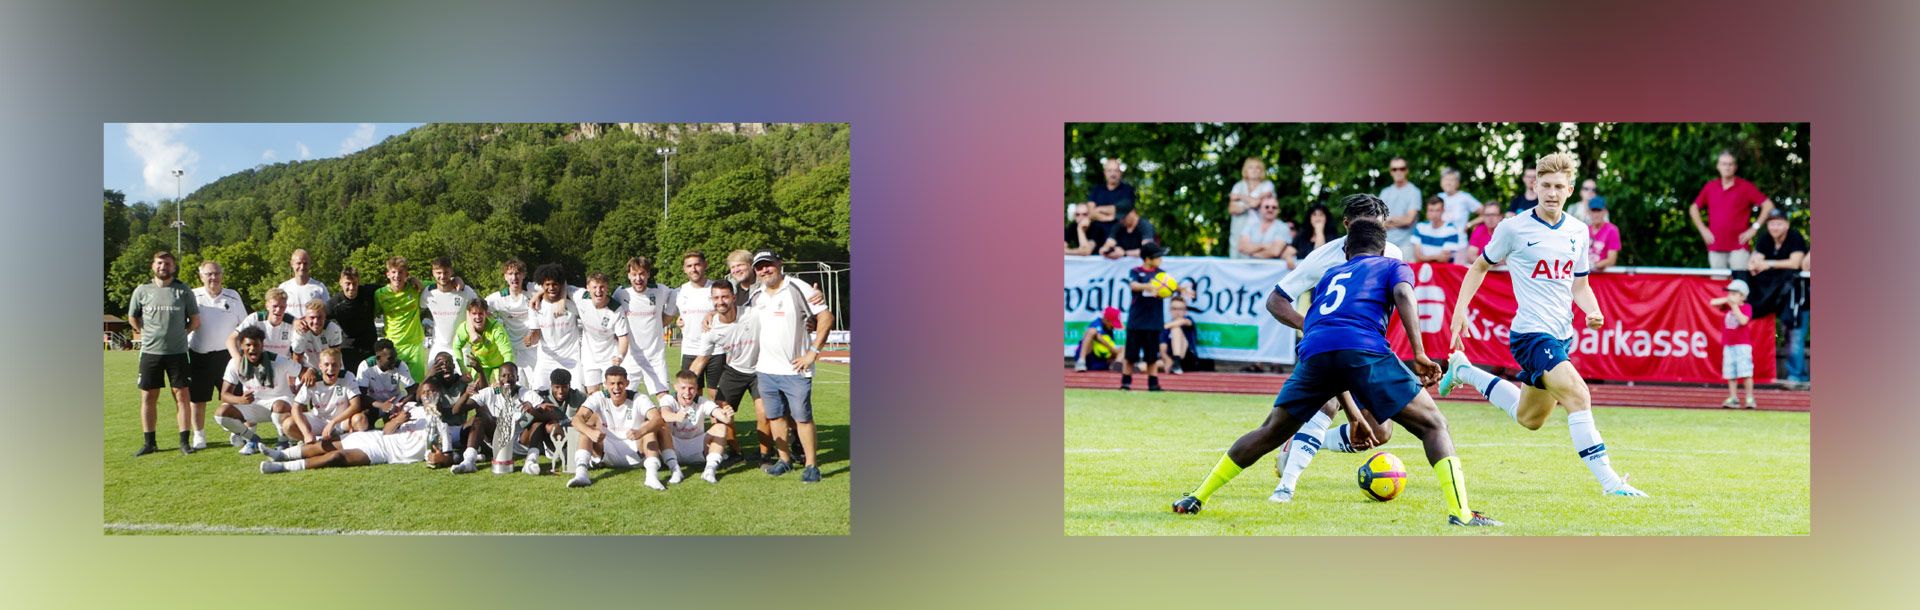 Internationales U19 Fußball-Turnier in Oberndorf a.N.!